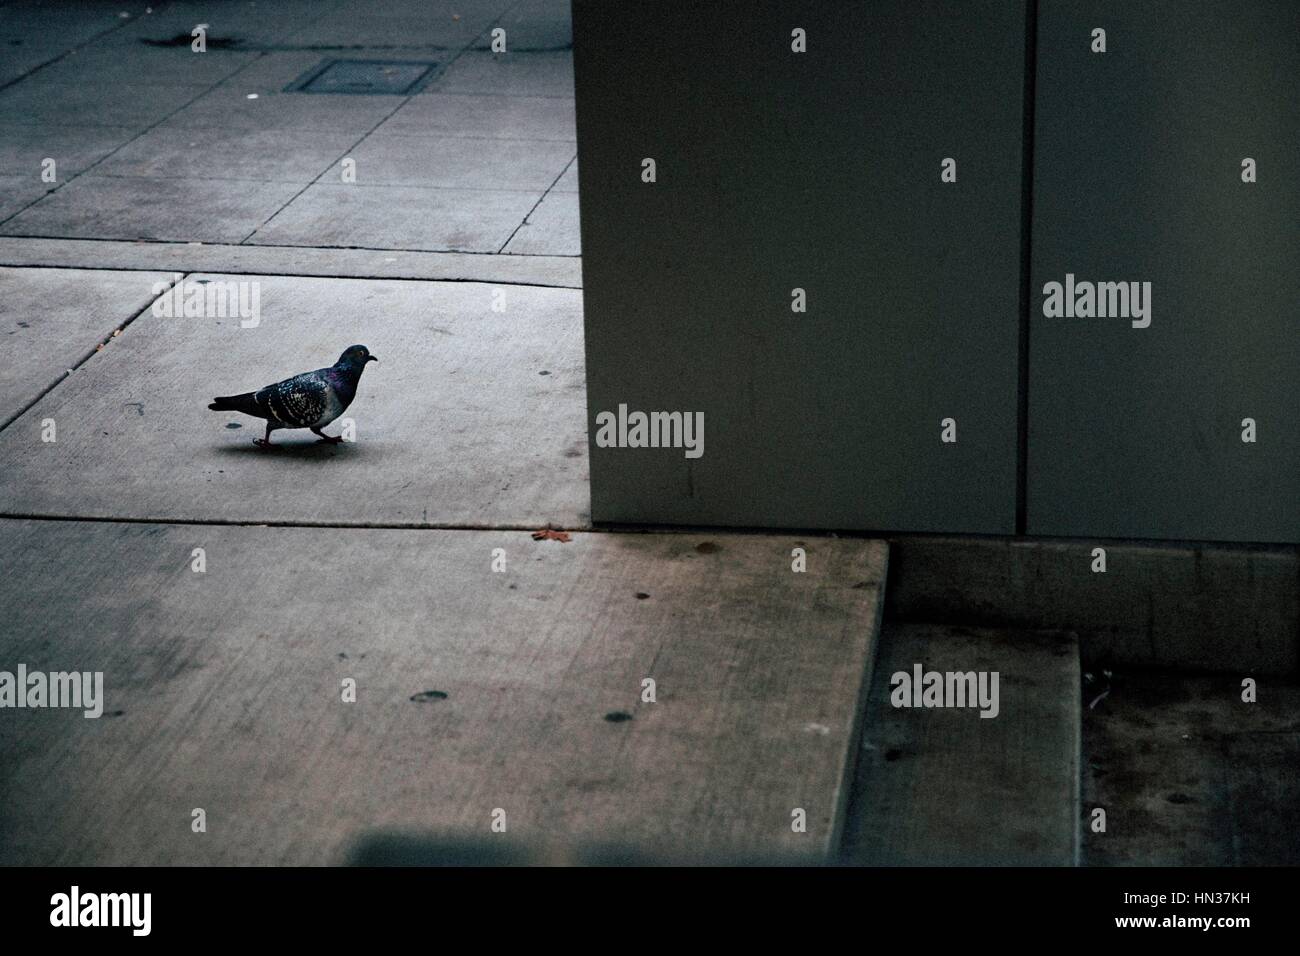 Pigeon walking alone in an urban landscape Stock Photo